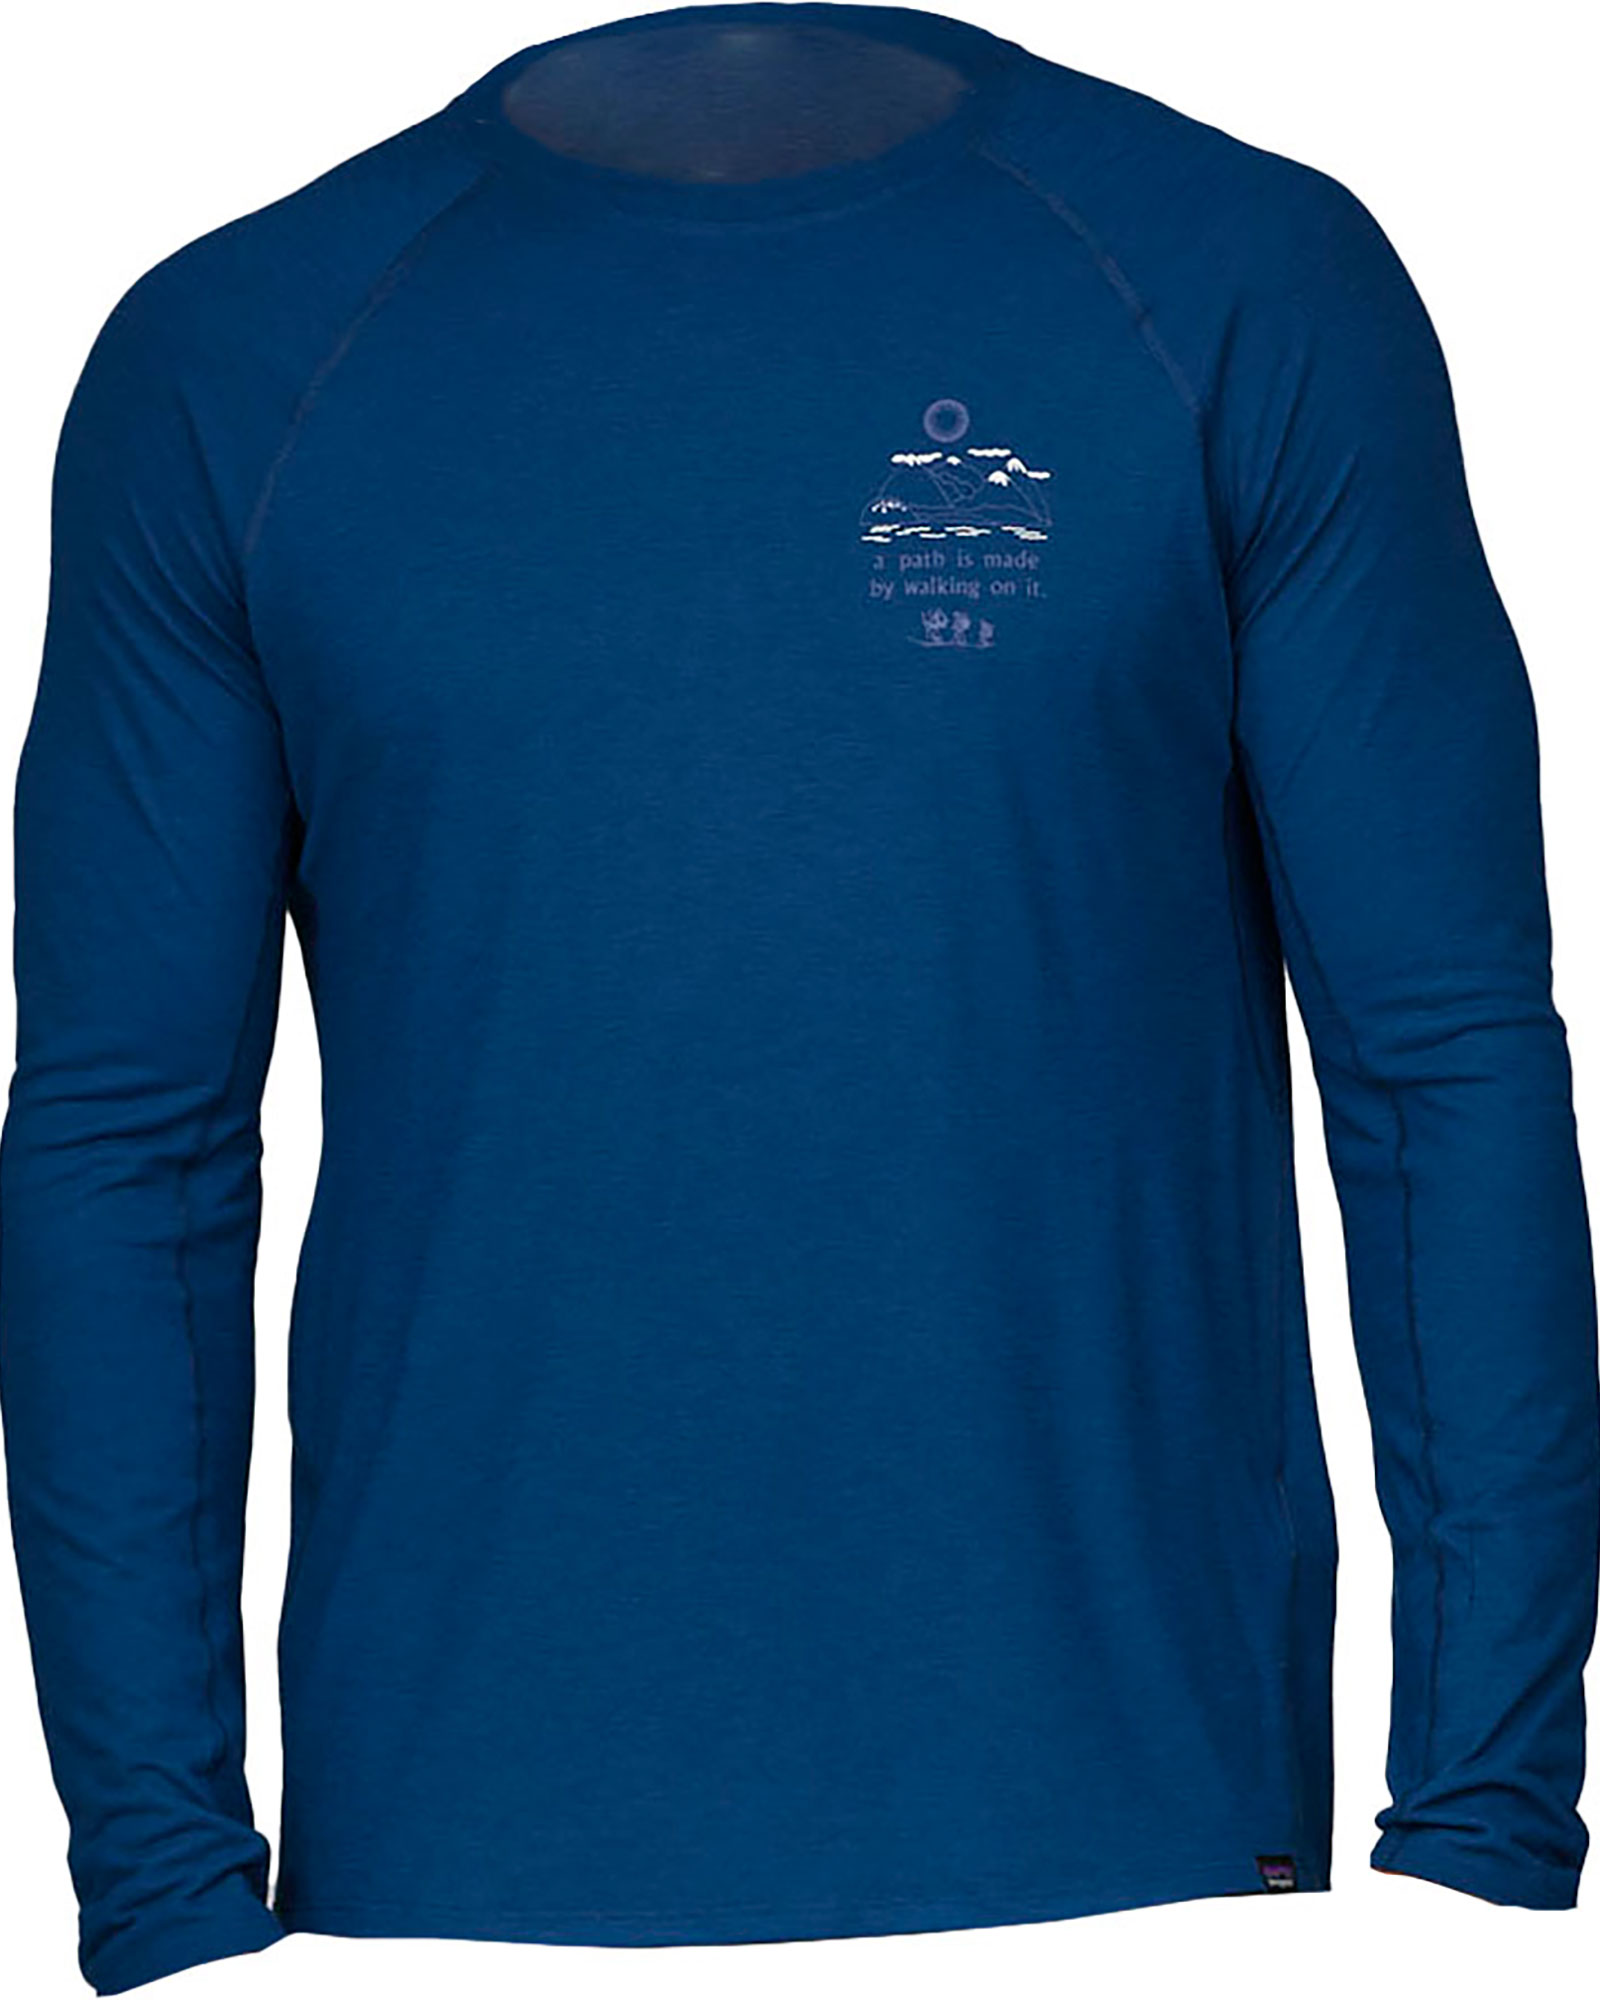 Patagonia Men’s Cap Cool Trail Long Sleeved Shirt - Lagom Blue M